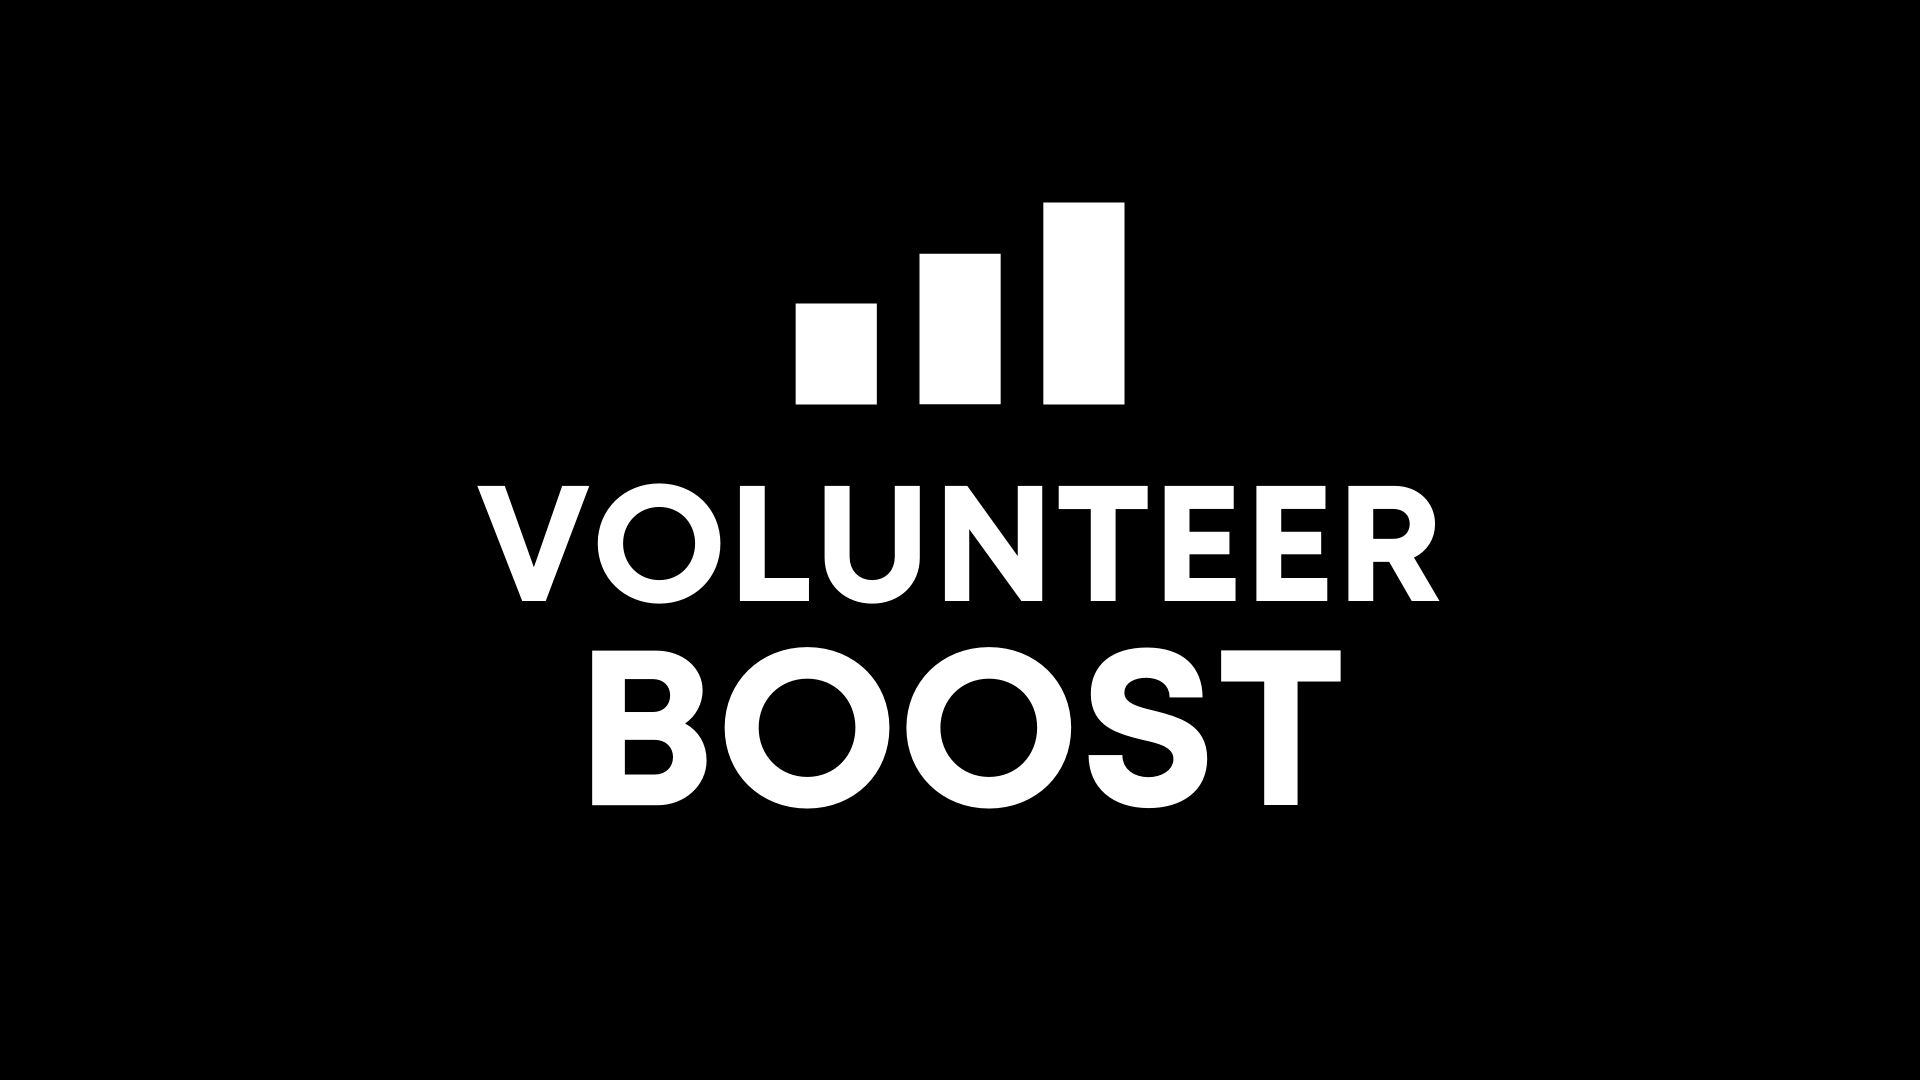 Volunteer Boost Lg 1920x1080 1